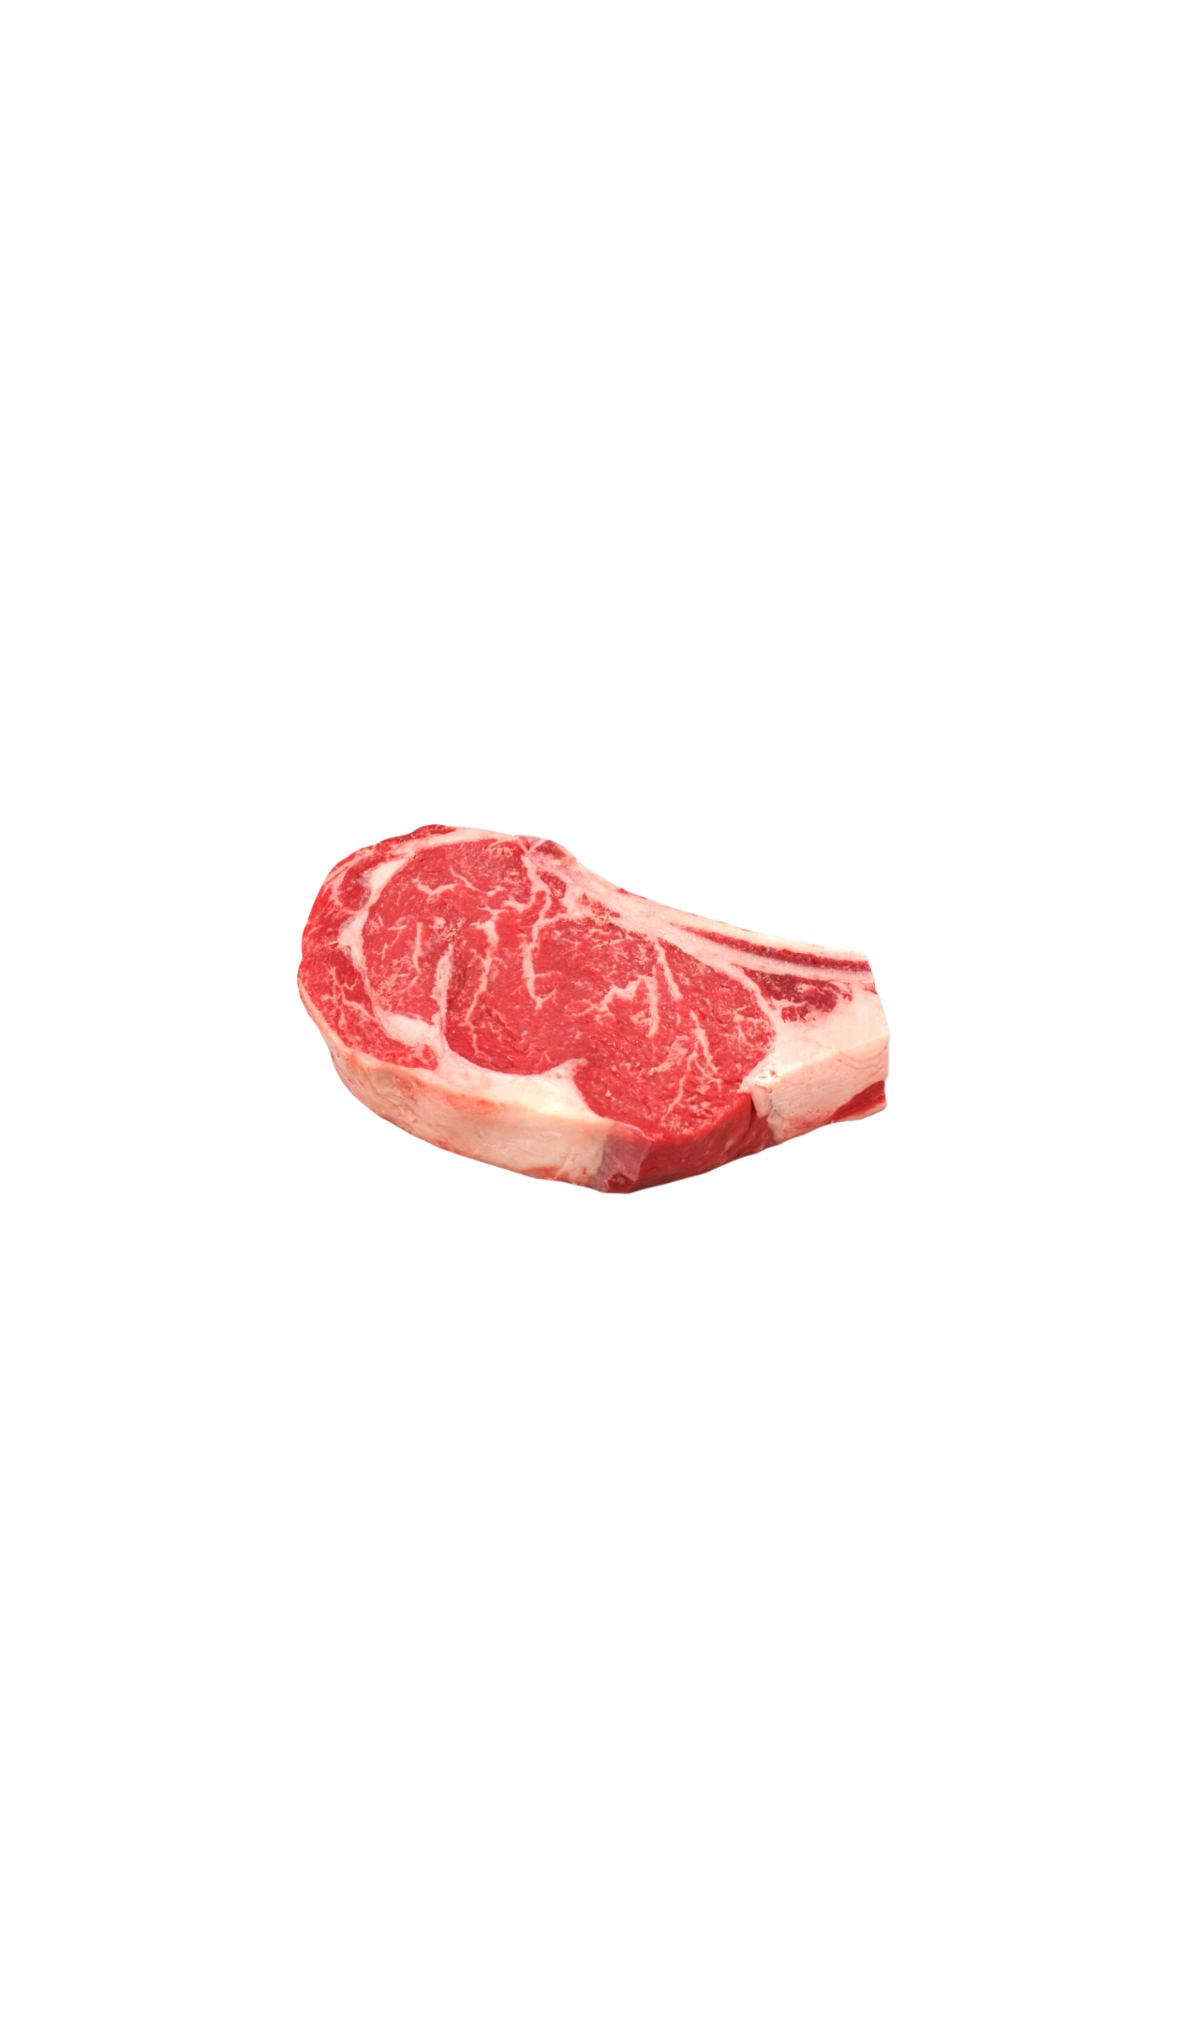 High Quality Steak Blank Meme Template